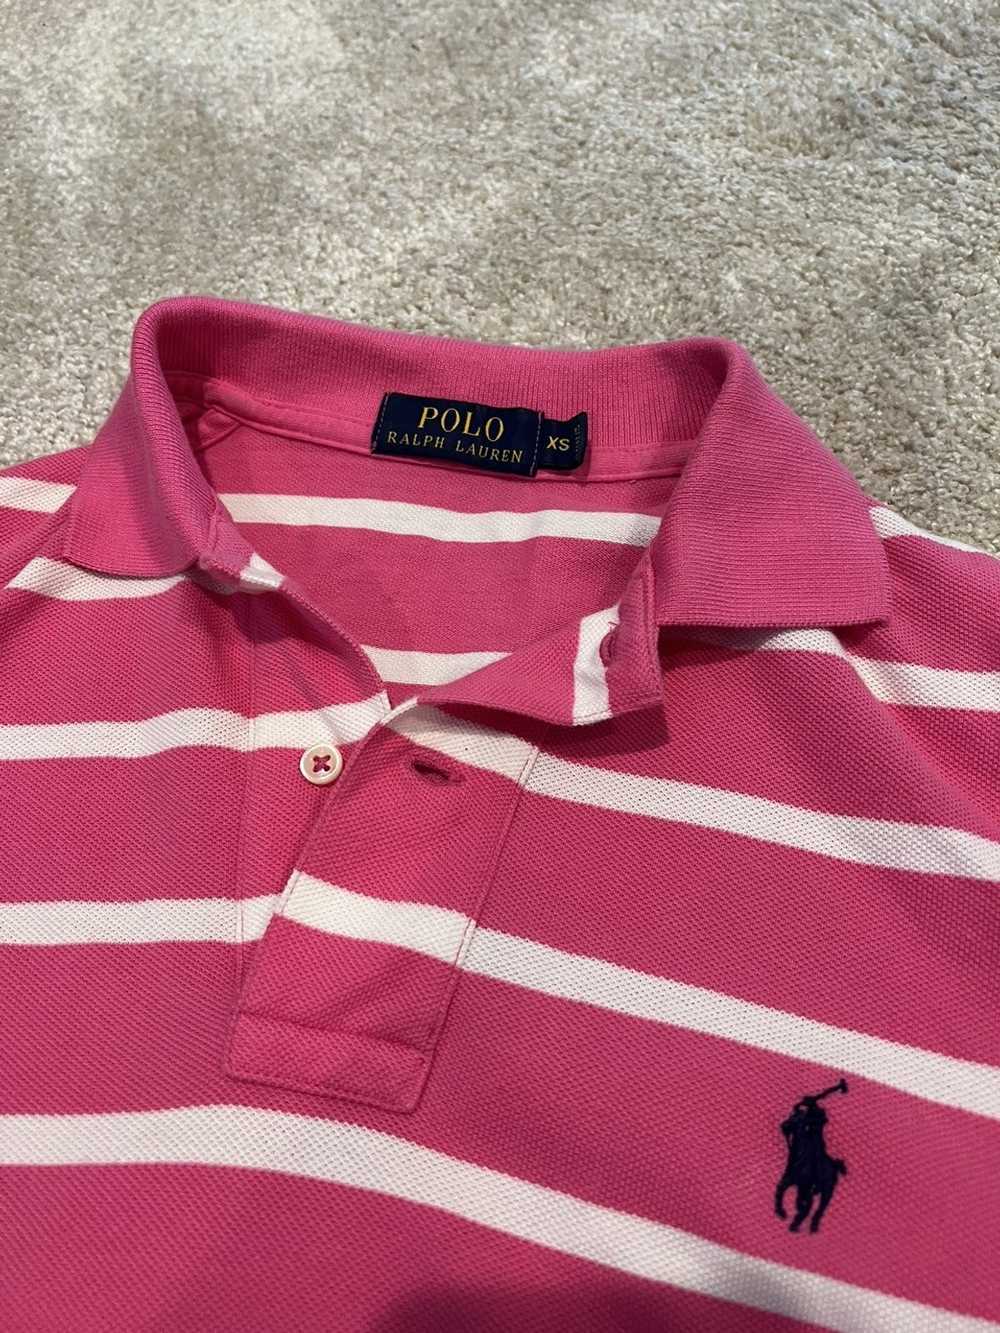 Polo Ralph Lauren Striped Polo Shirt - Gem